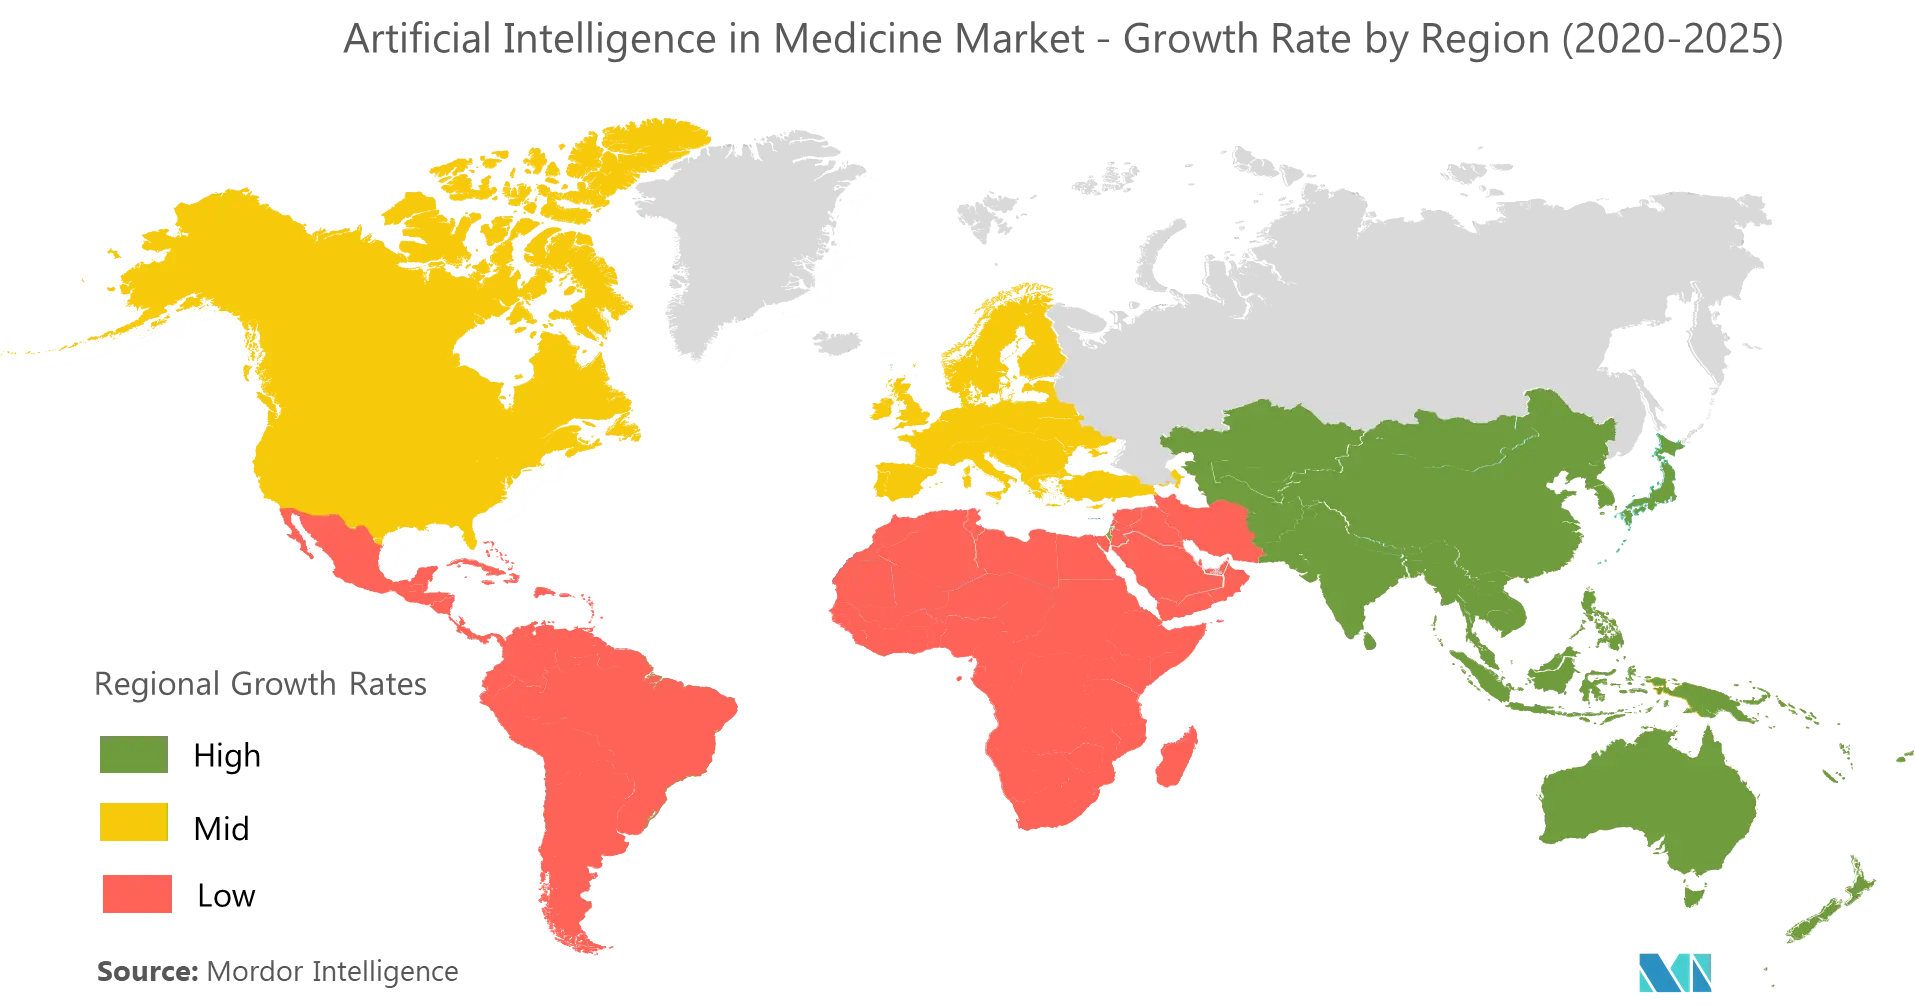 Artificial Intelligence in Medicine Market Growth by Region